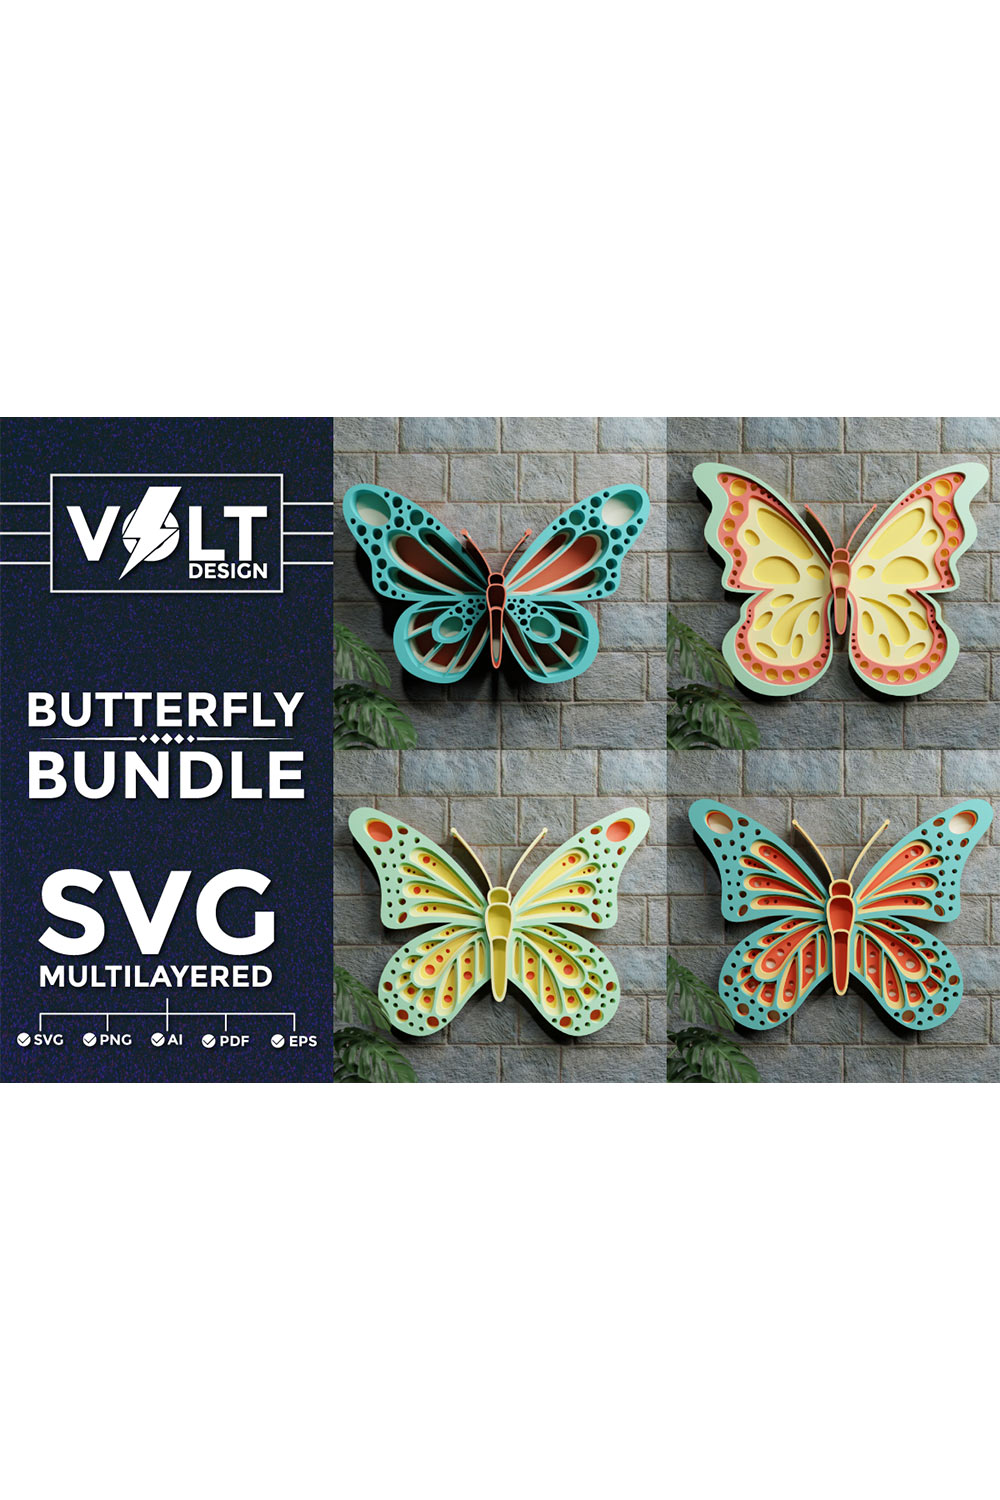 Butterfly 3D SVG Multilayered Bundle pinterest preview image.